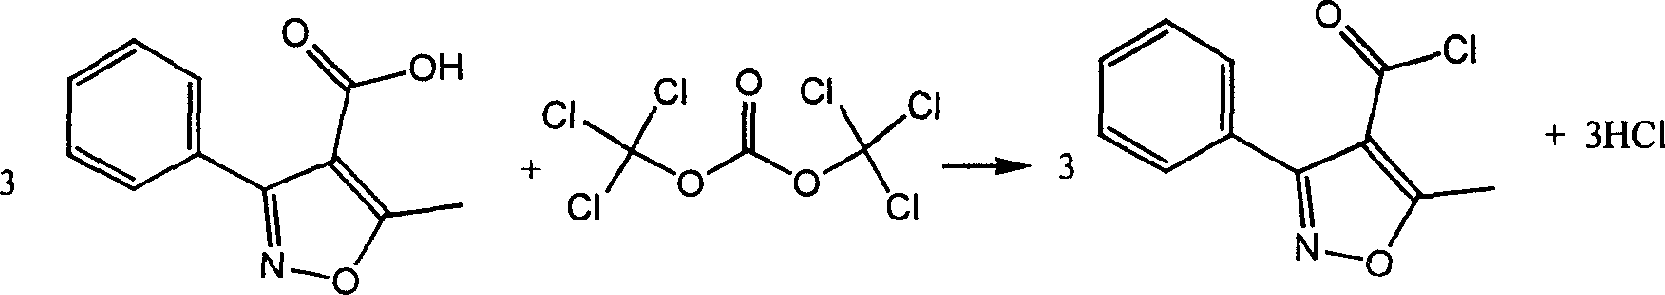 Chemical synthesis method of 3-phenyl-5-methylisoxazole-4-formyl chloride